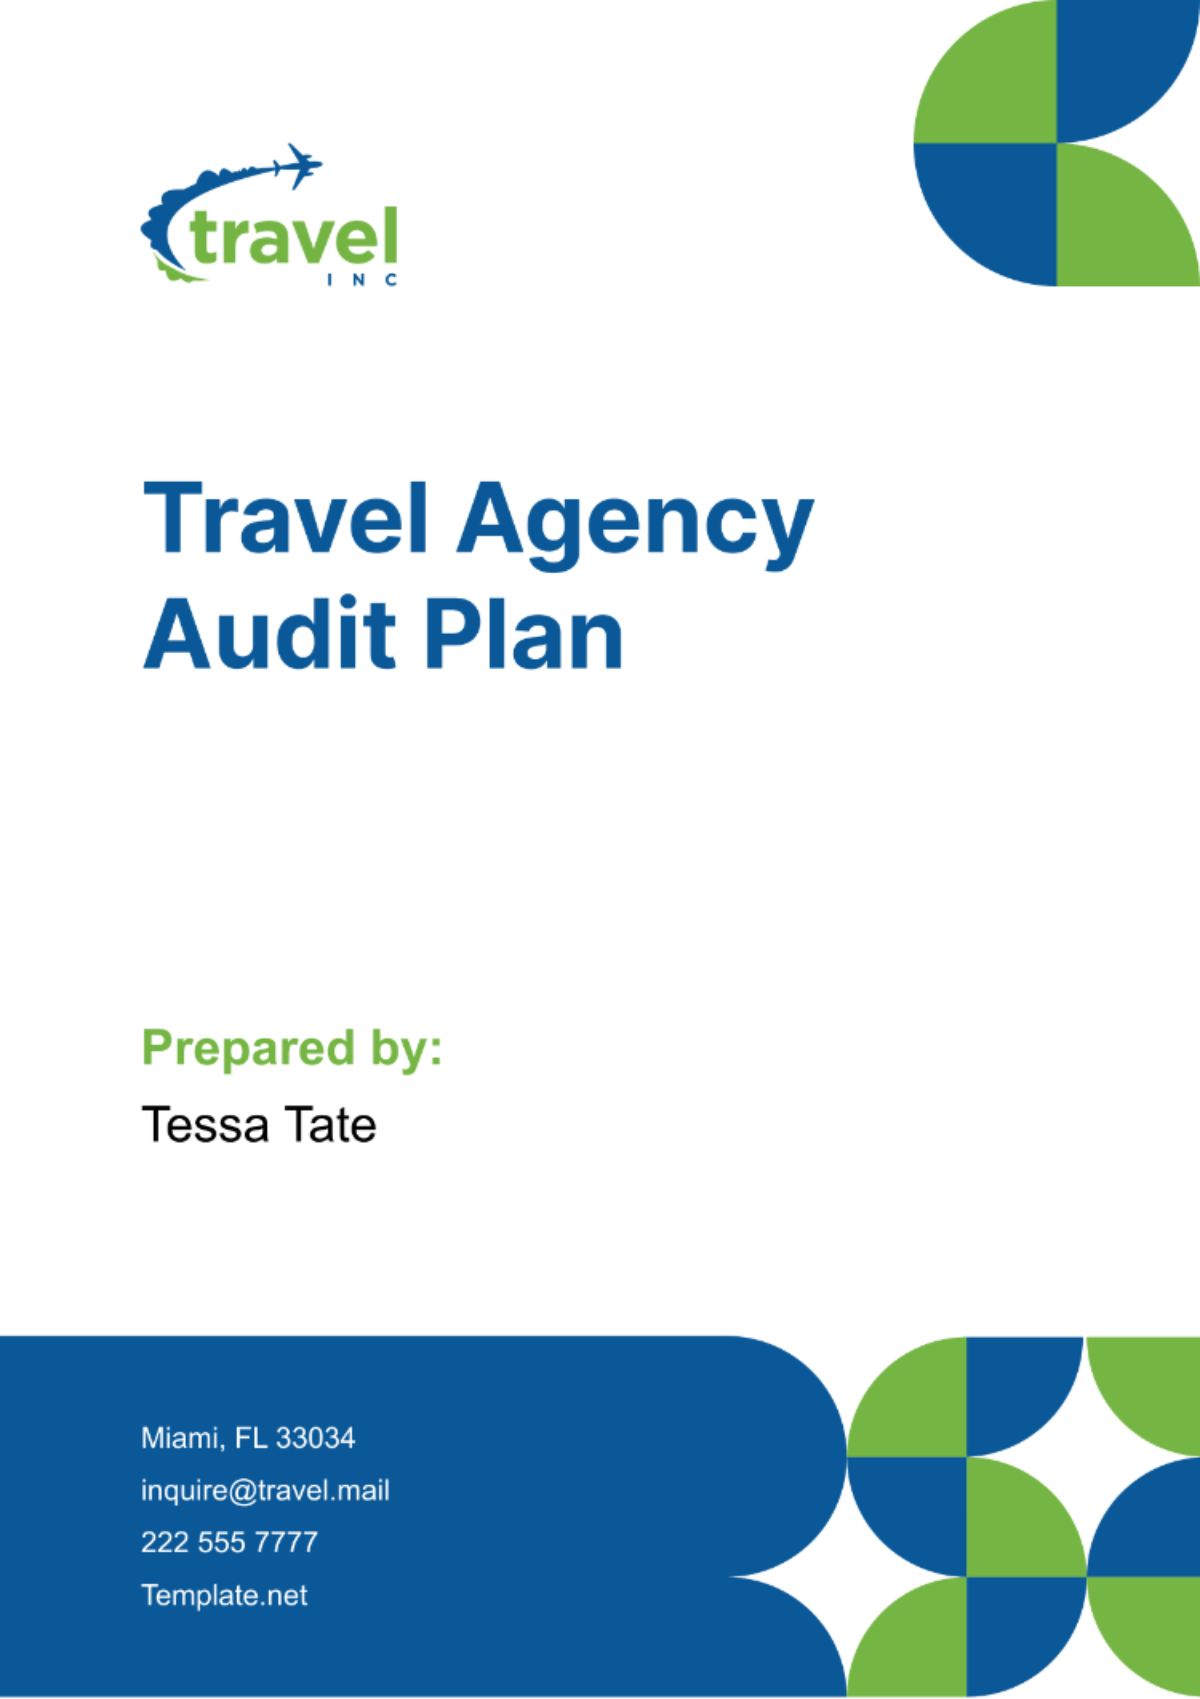 Travel Agency Audit Plan Template